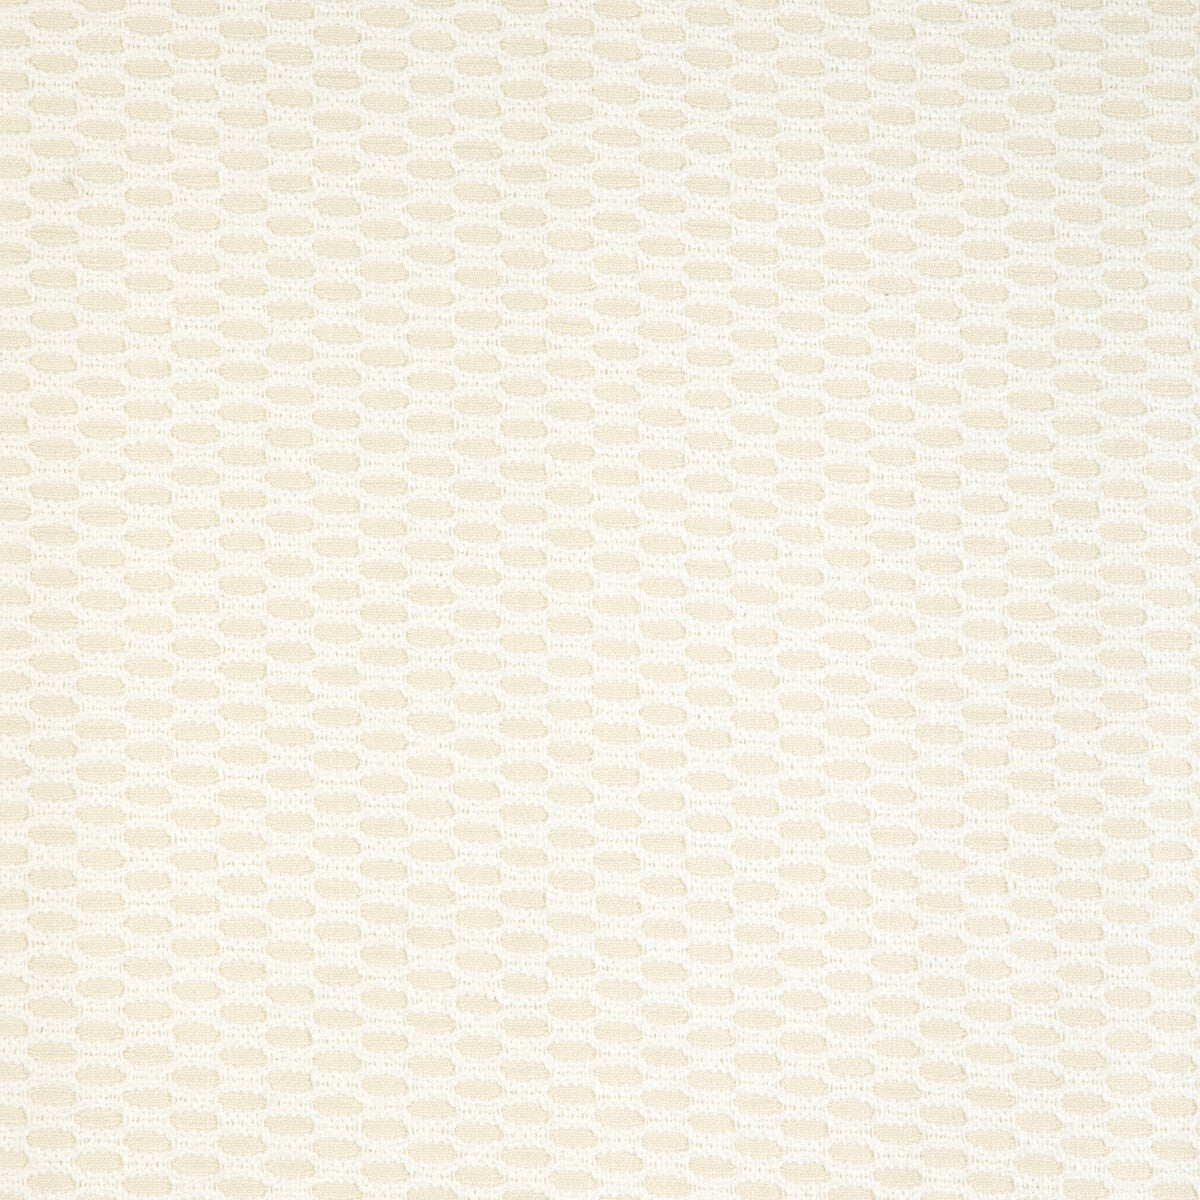 Kravet Smart fabric in 37005-101 color - pattern 37005.101.0 - by Kravet Smart in the Pavilion collection